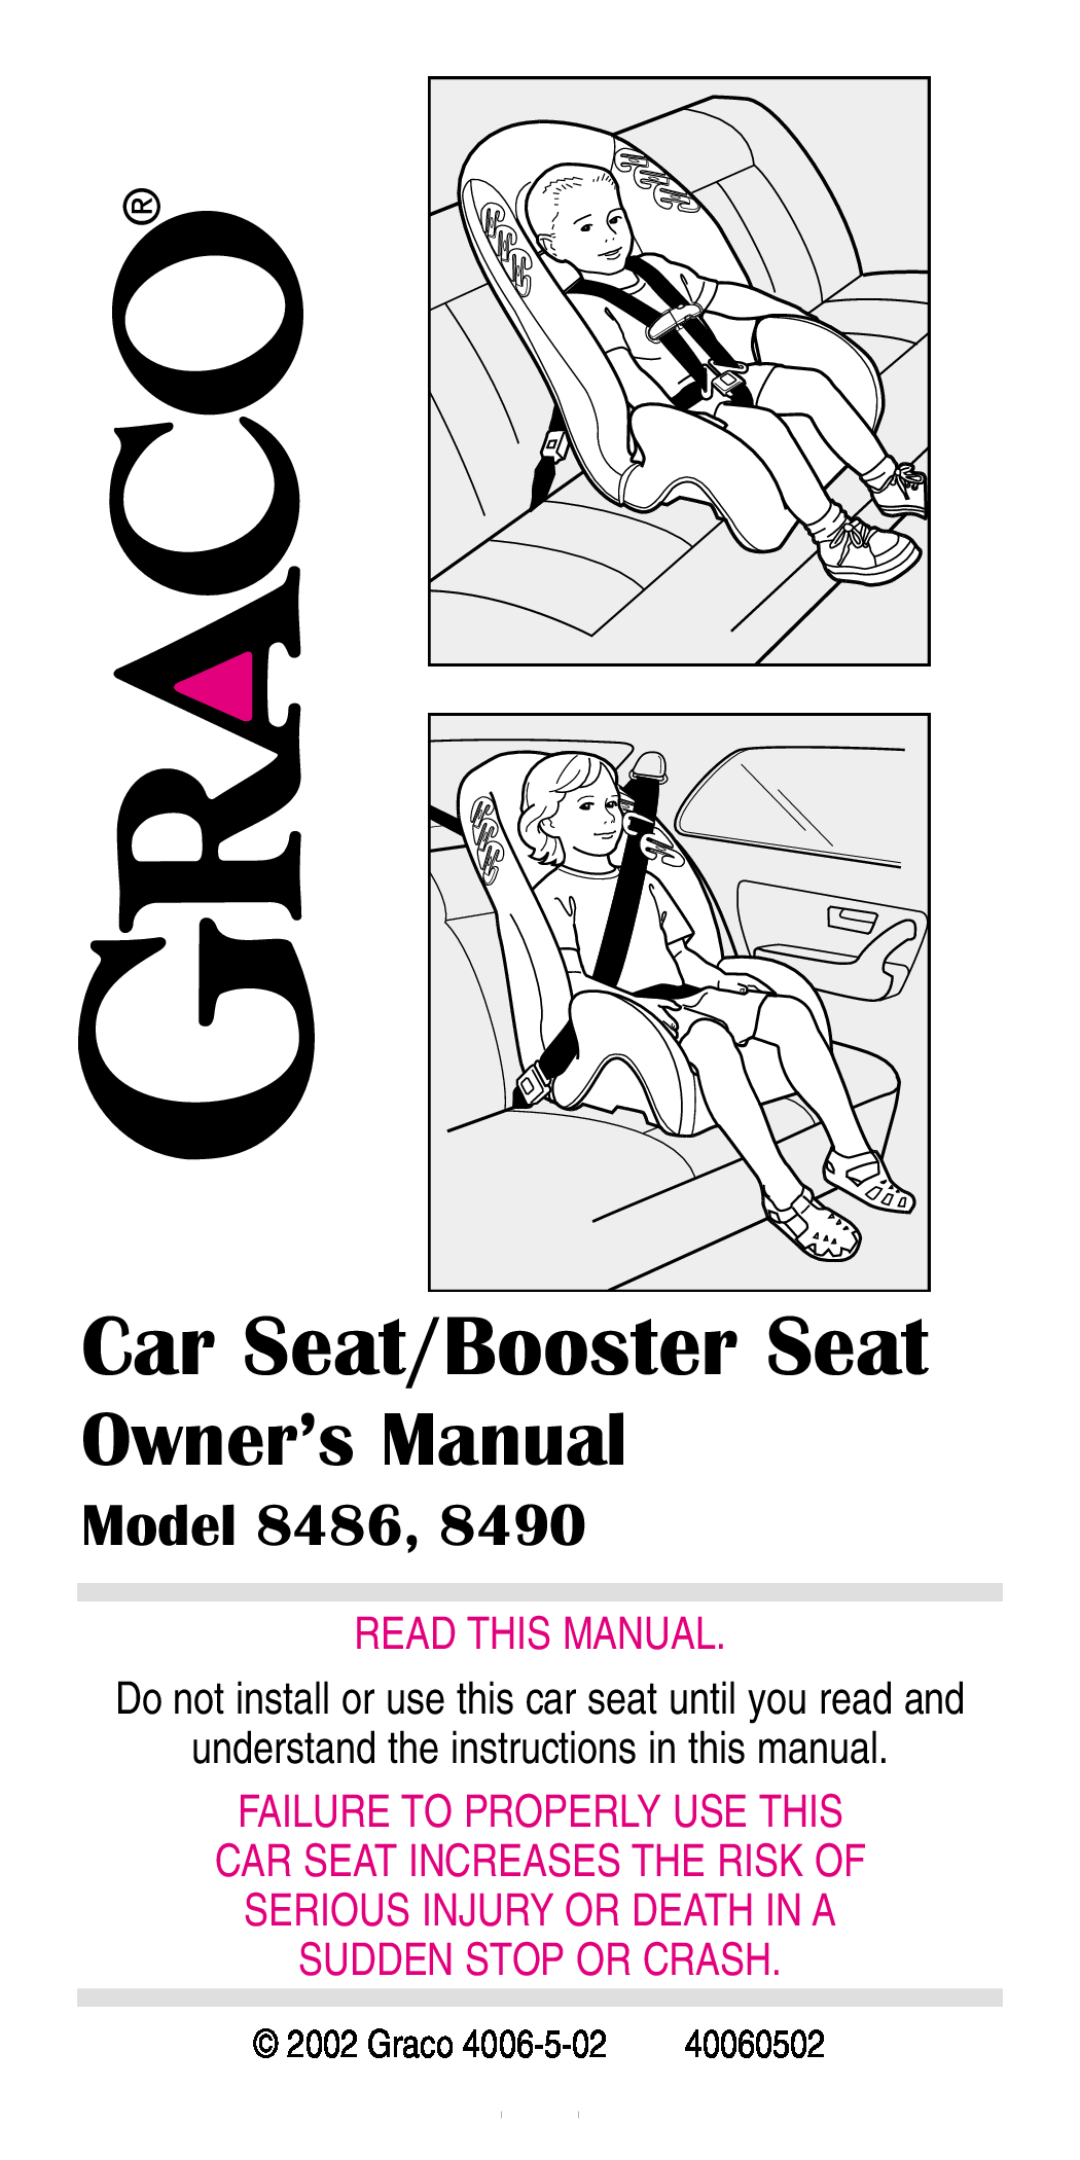 Graco 8486, 8490 manual Car Seat/Booster Seat, Owner’s Manual, Model, Read This Manual, 40060502 